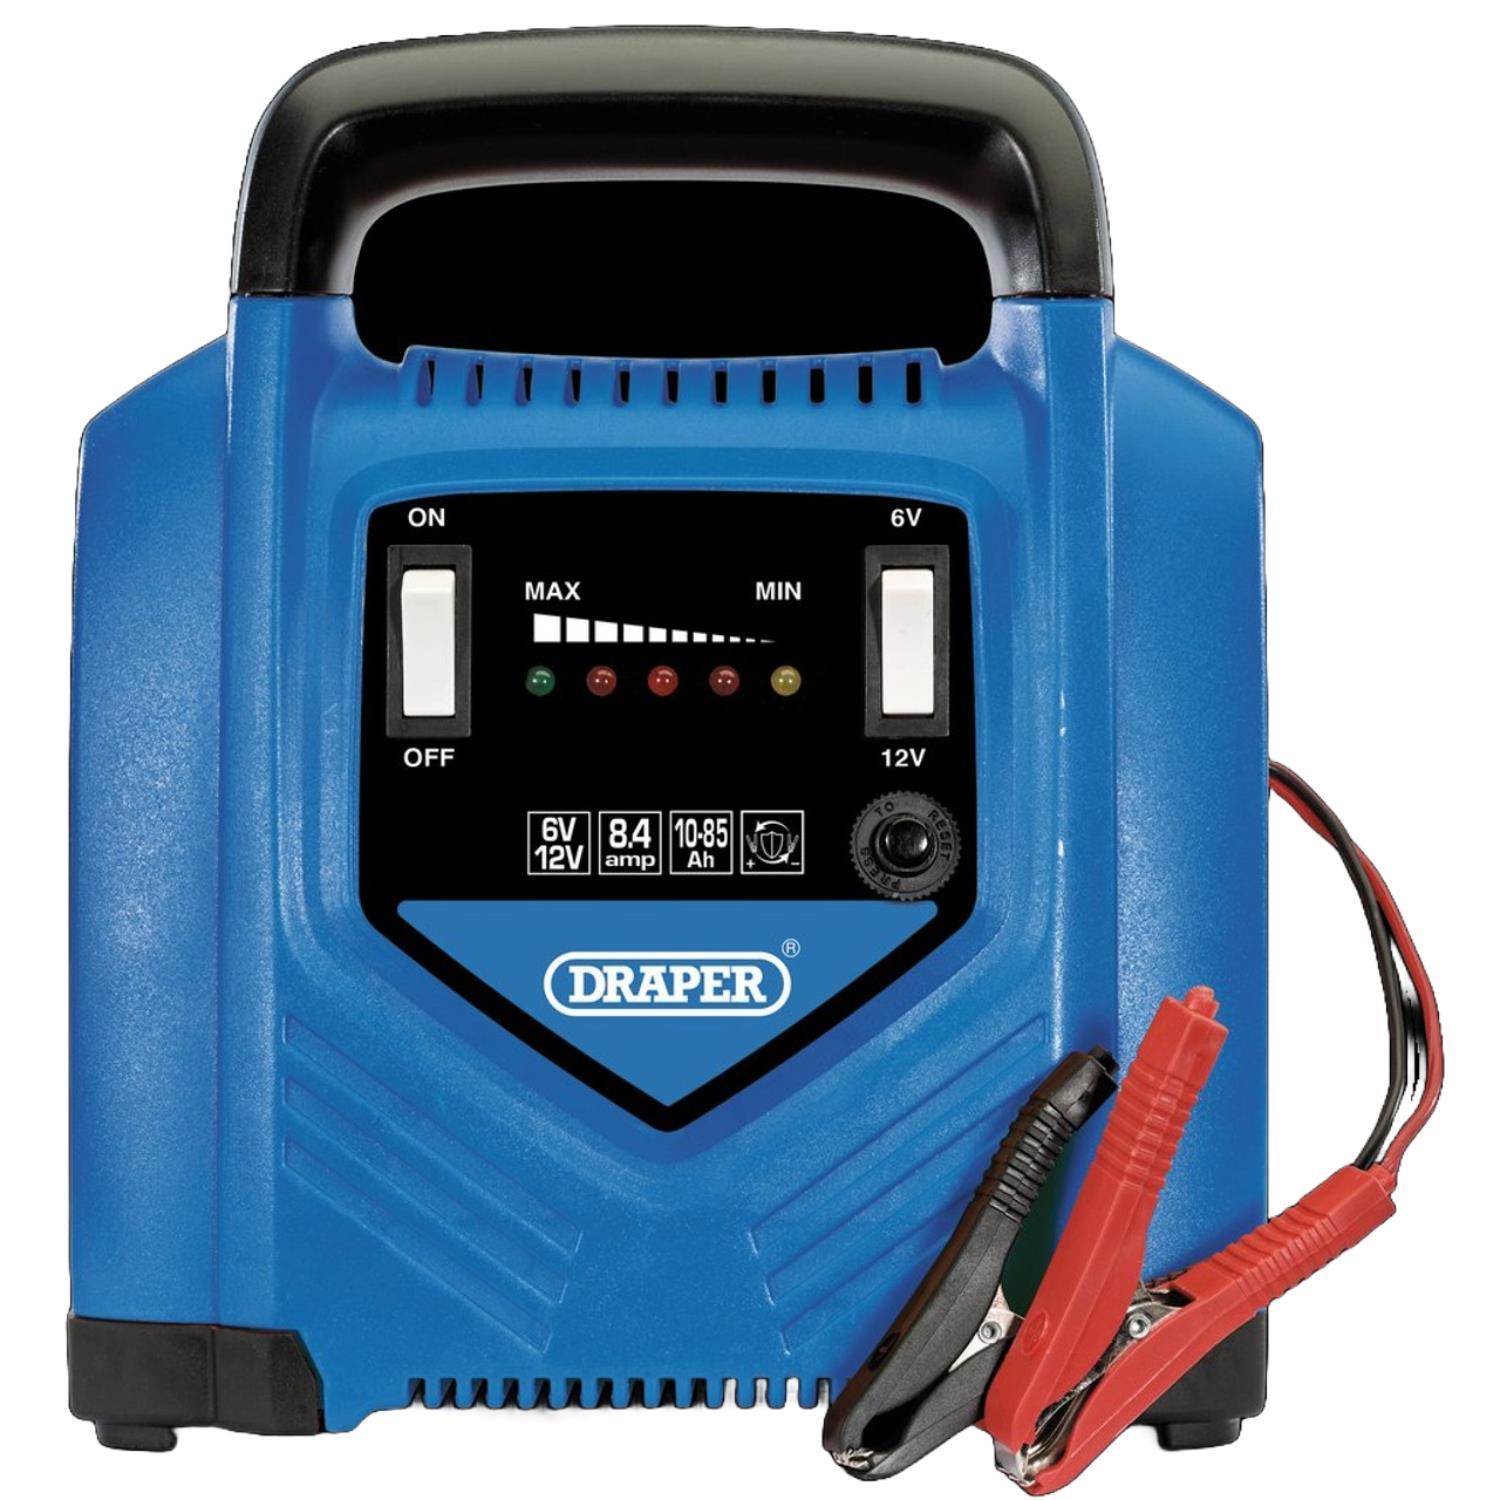 Draper 6V/12V Battery Charger, 8.4A, 10 - 85Ah, Blue and Black 70546 - Tools 2U Direct SW